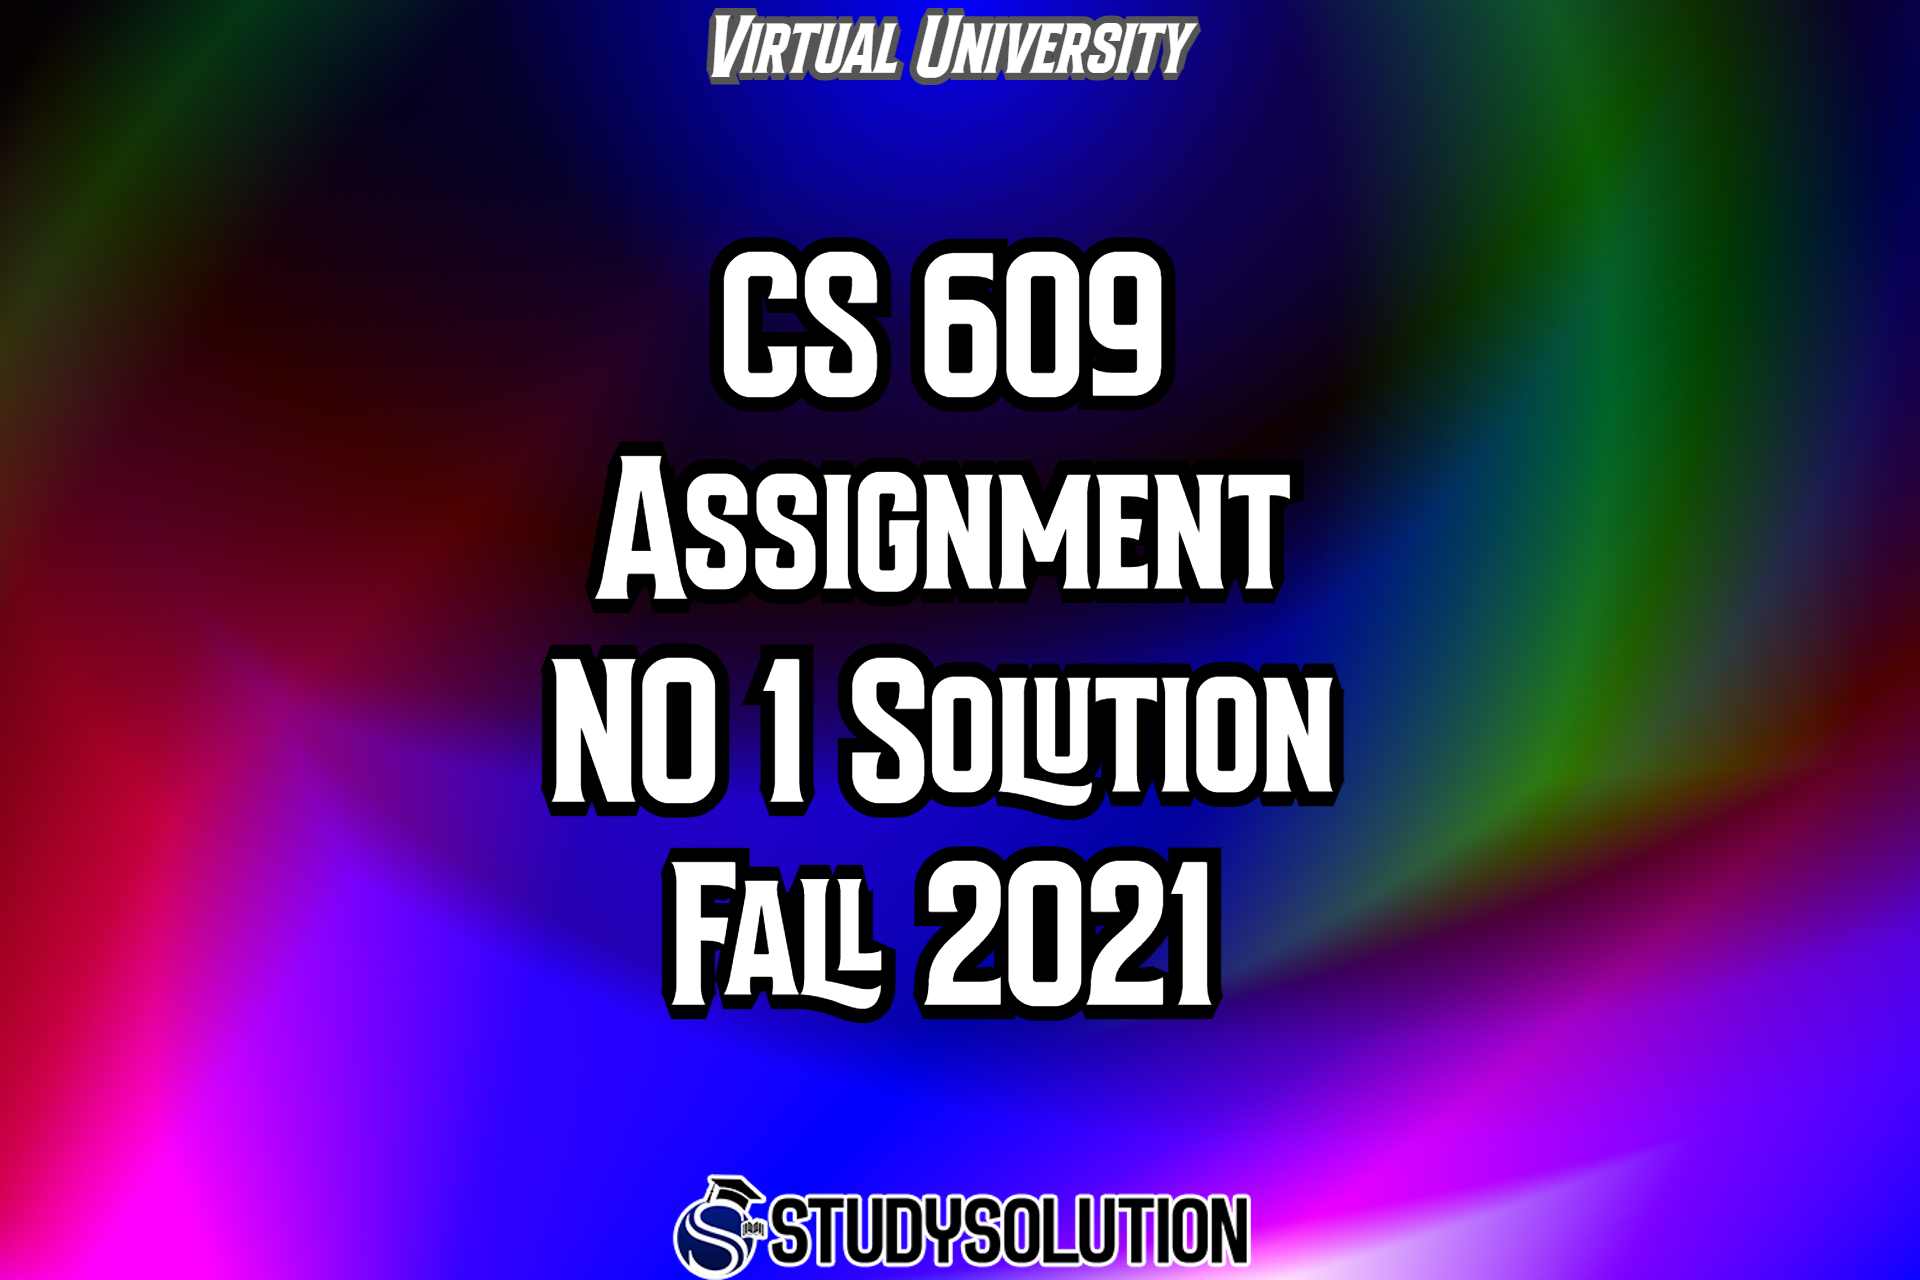 CS609 Assignment NO 1 Solution Fall 2021